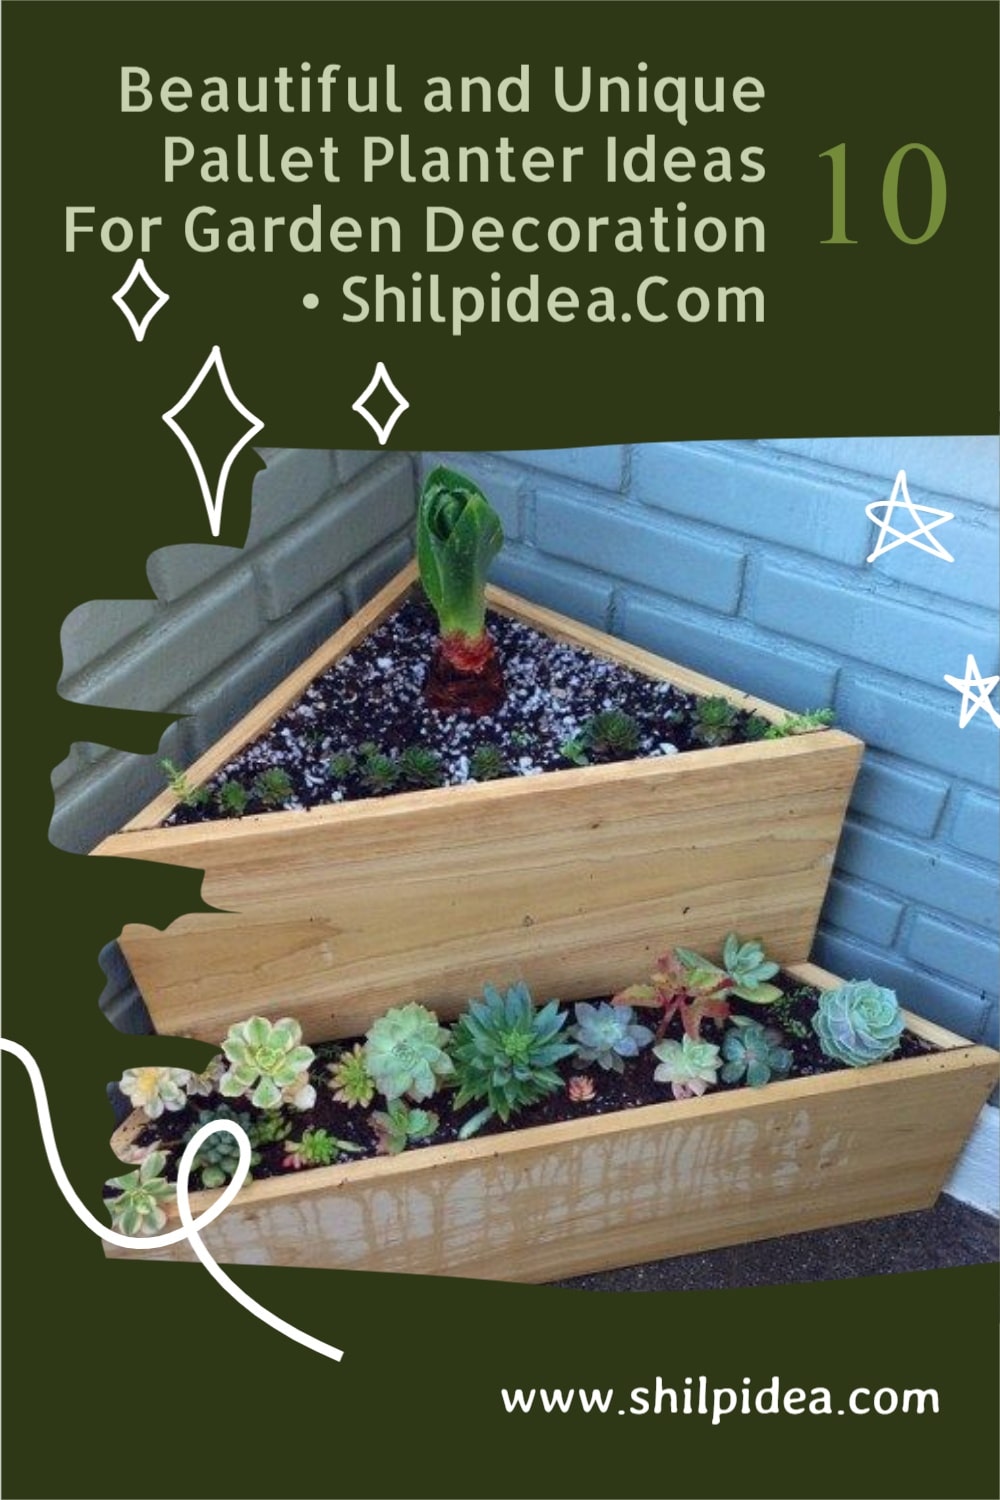 pallet-planter-ideas-for-garden-decoration-shilpidea